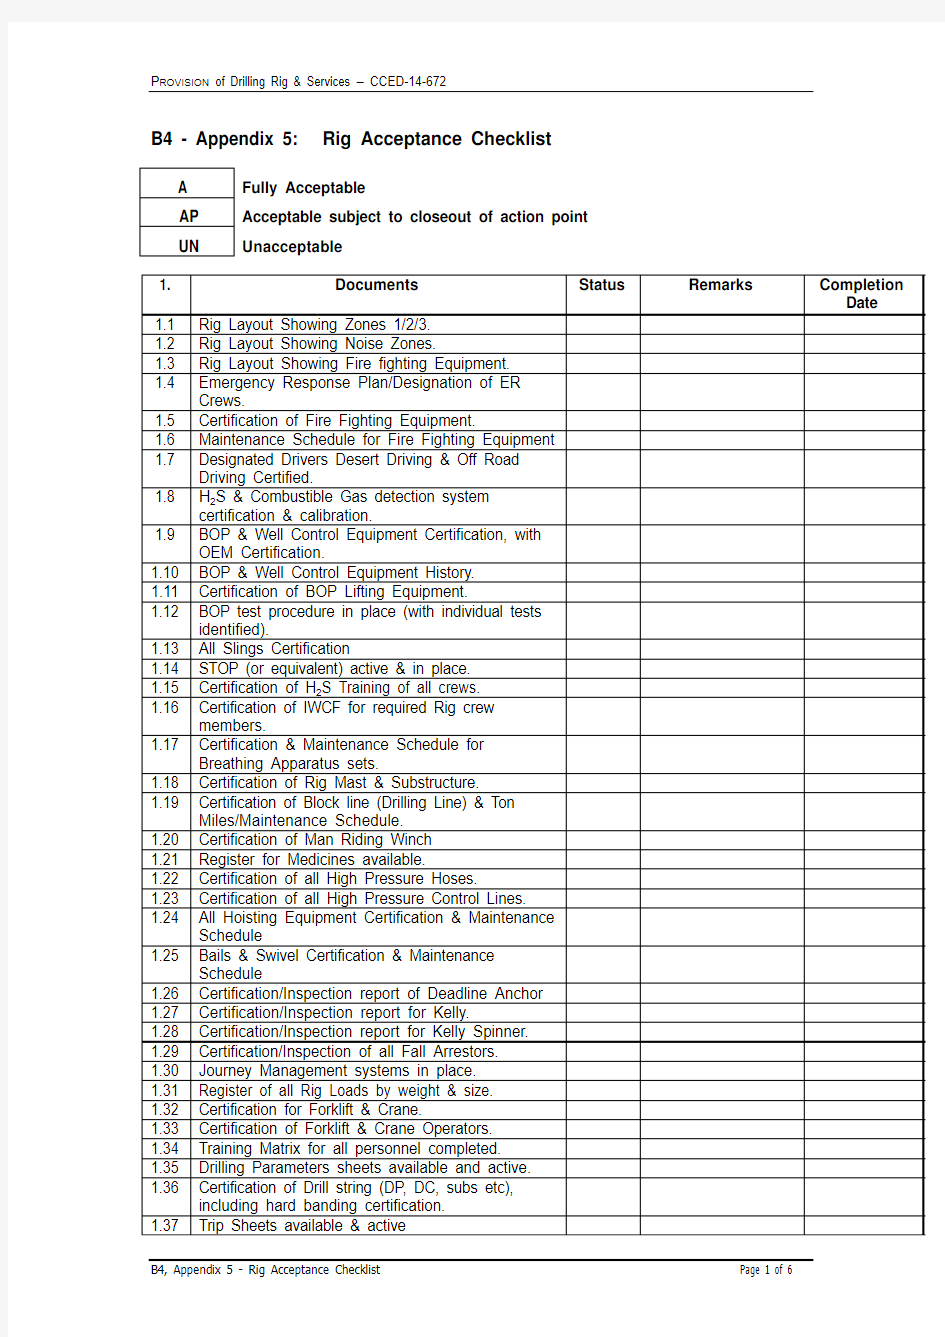 B4 Appendix 5 Rig Acceptance Checklist-Drilling Rig Services